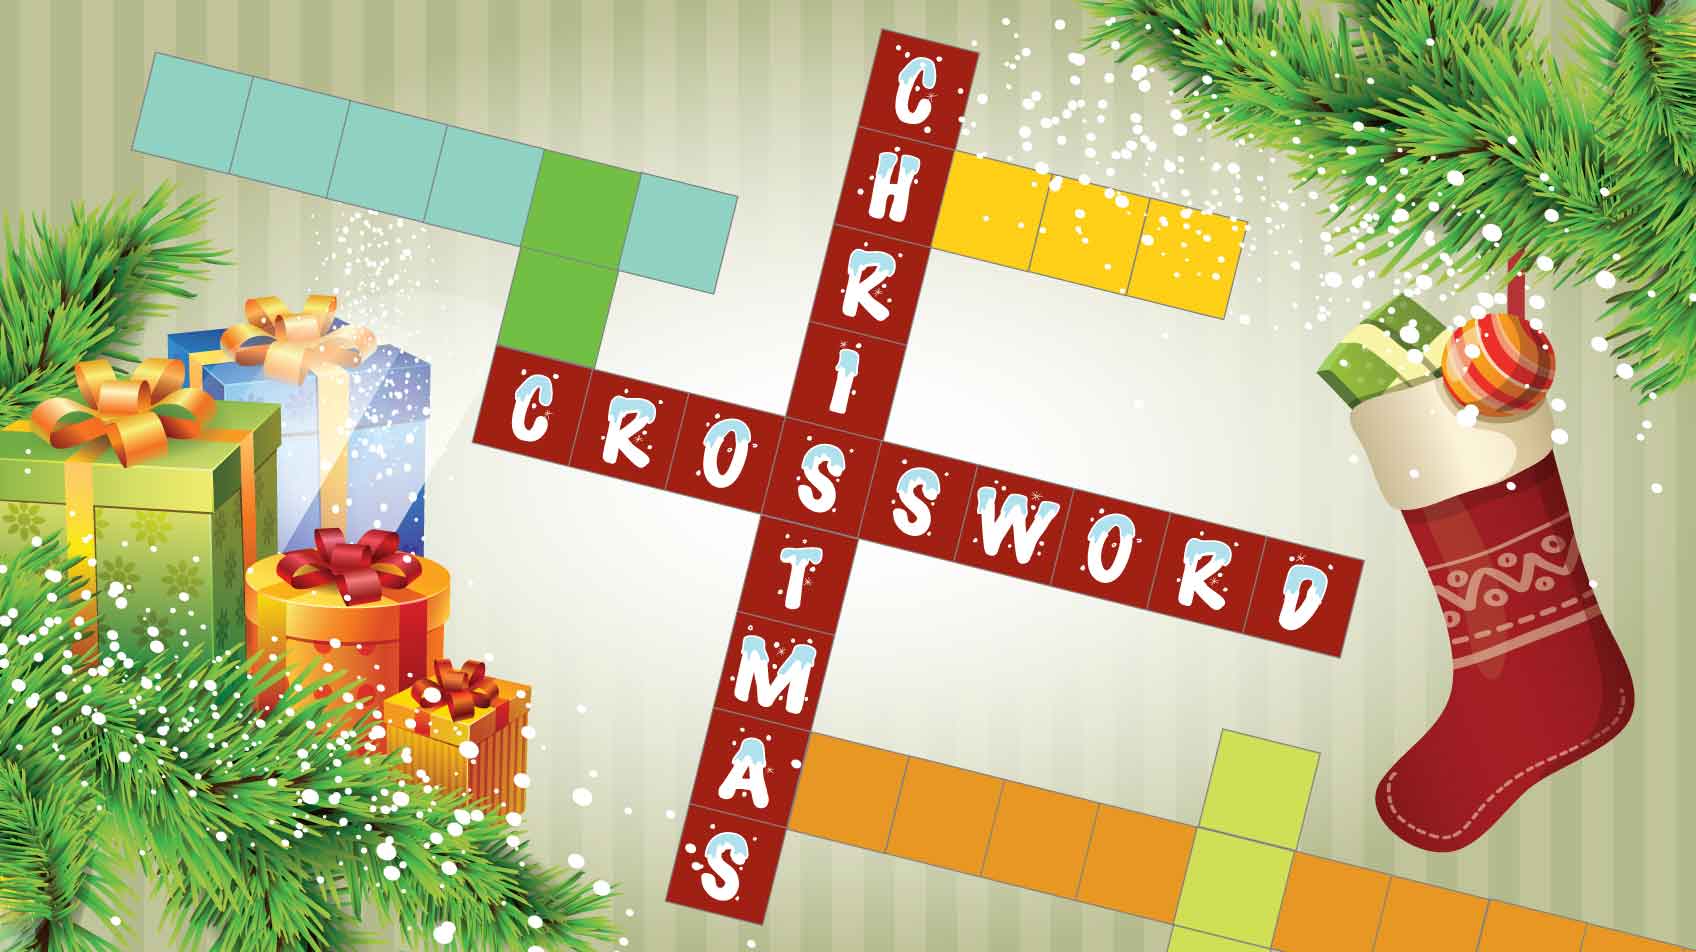 Christmas Crossword